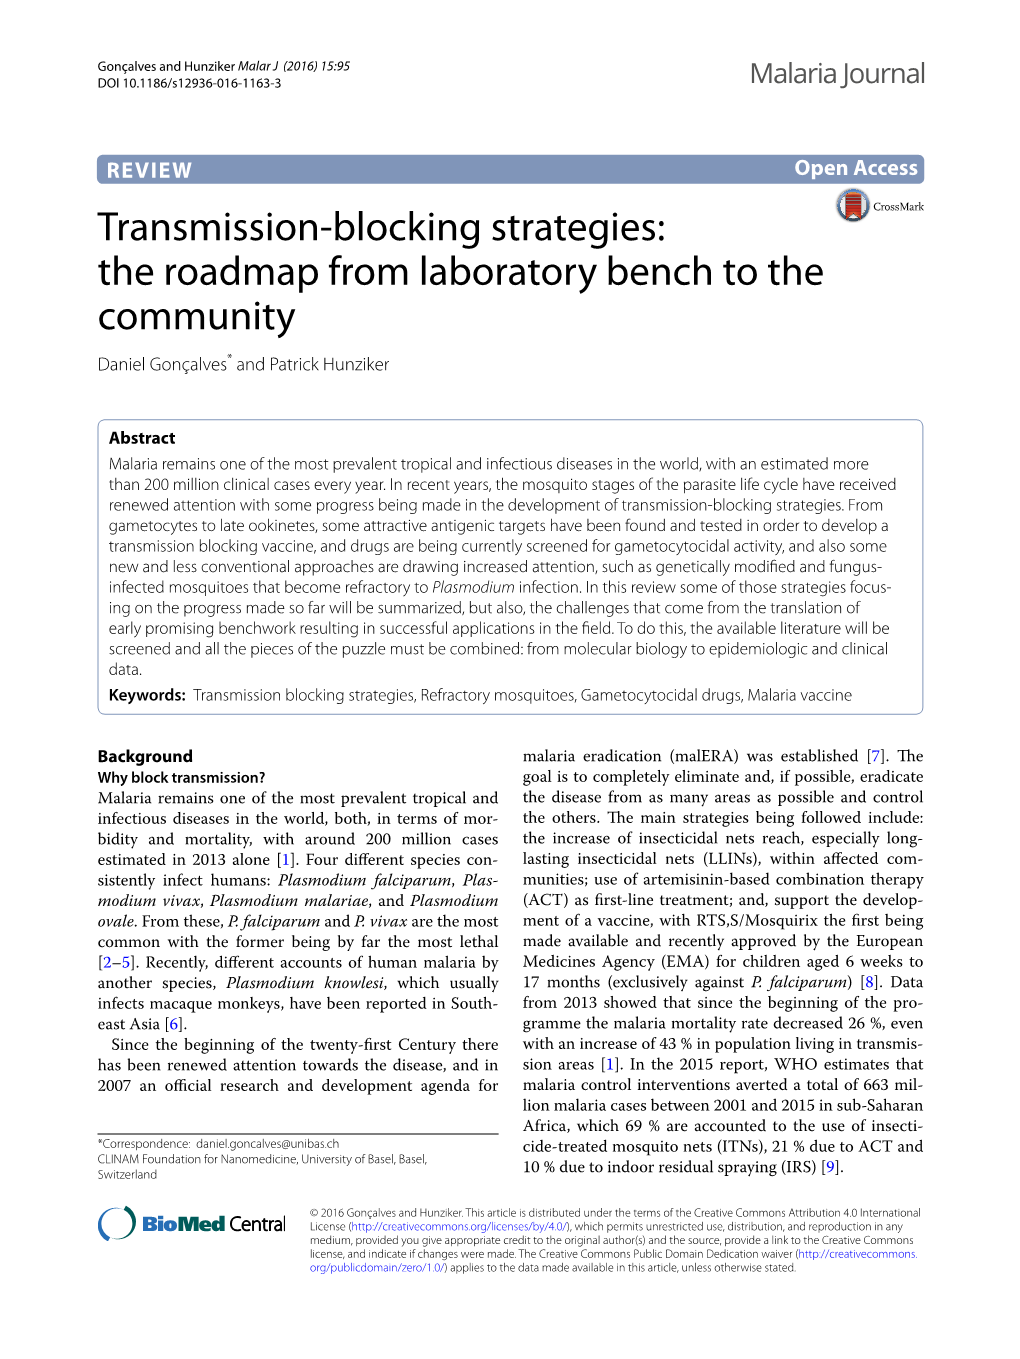 Transmission-Blocking Strategies